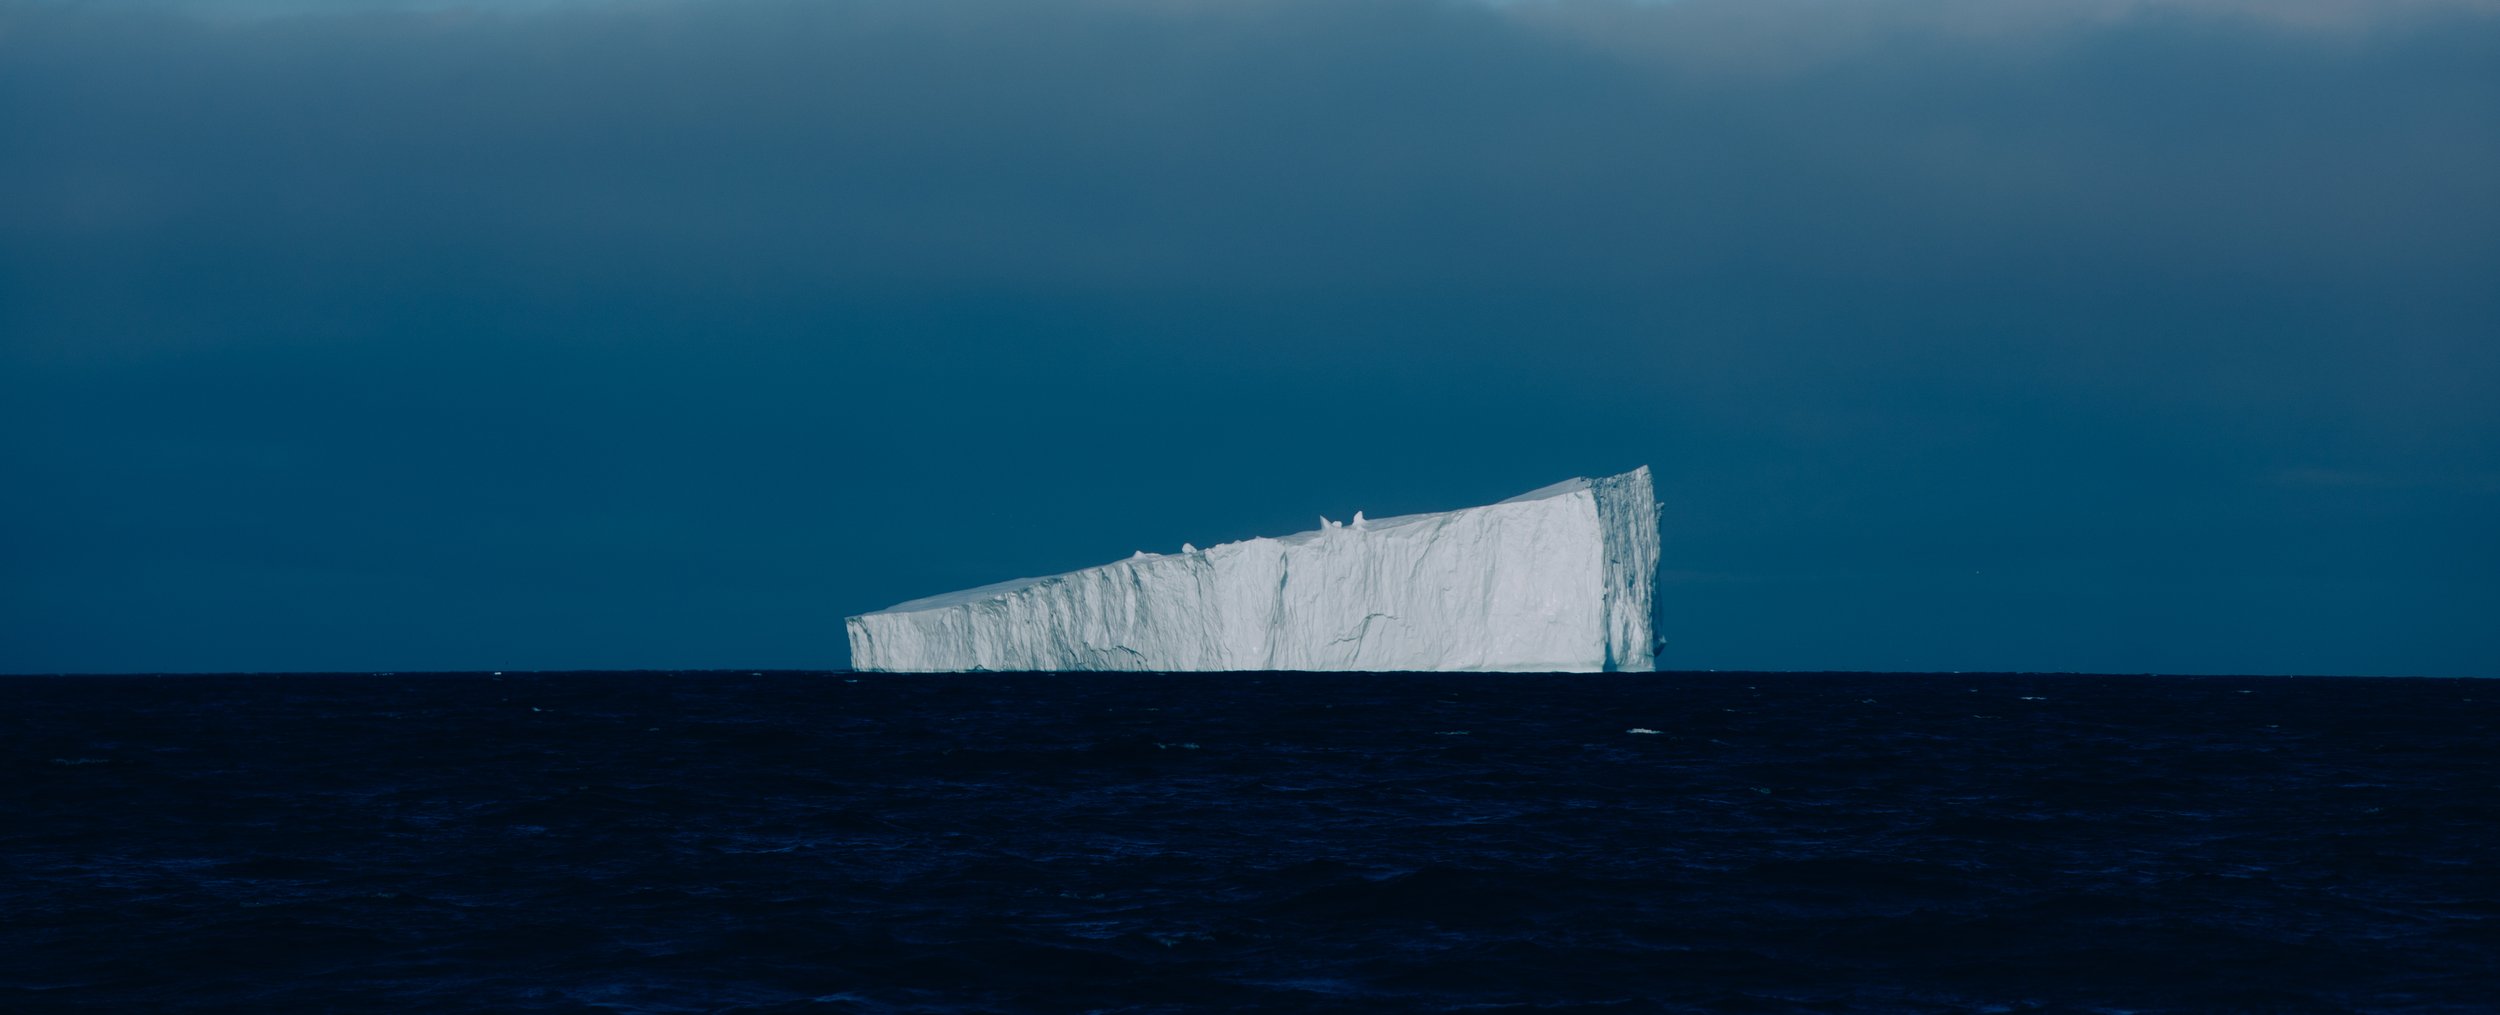 Weddell Sea Ice Sheet